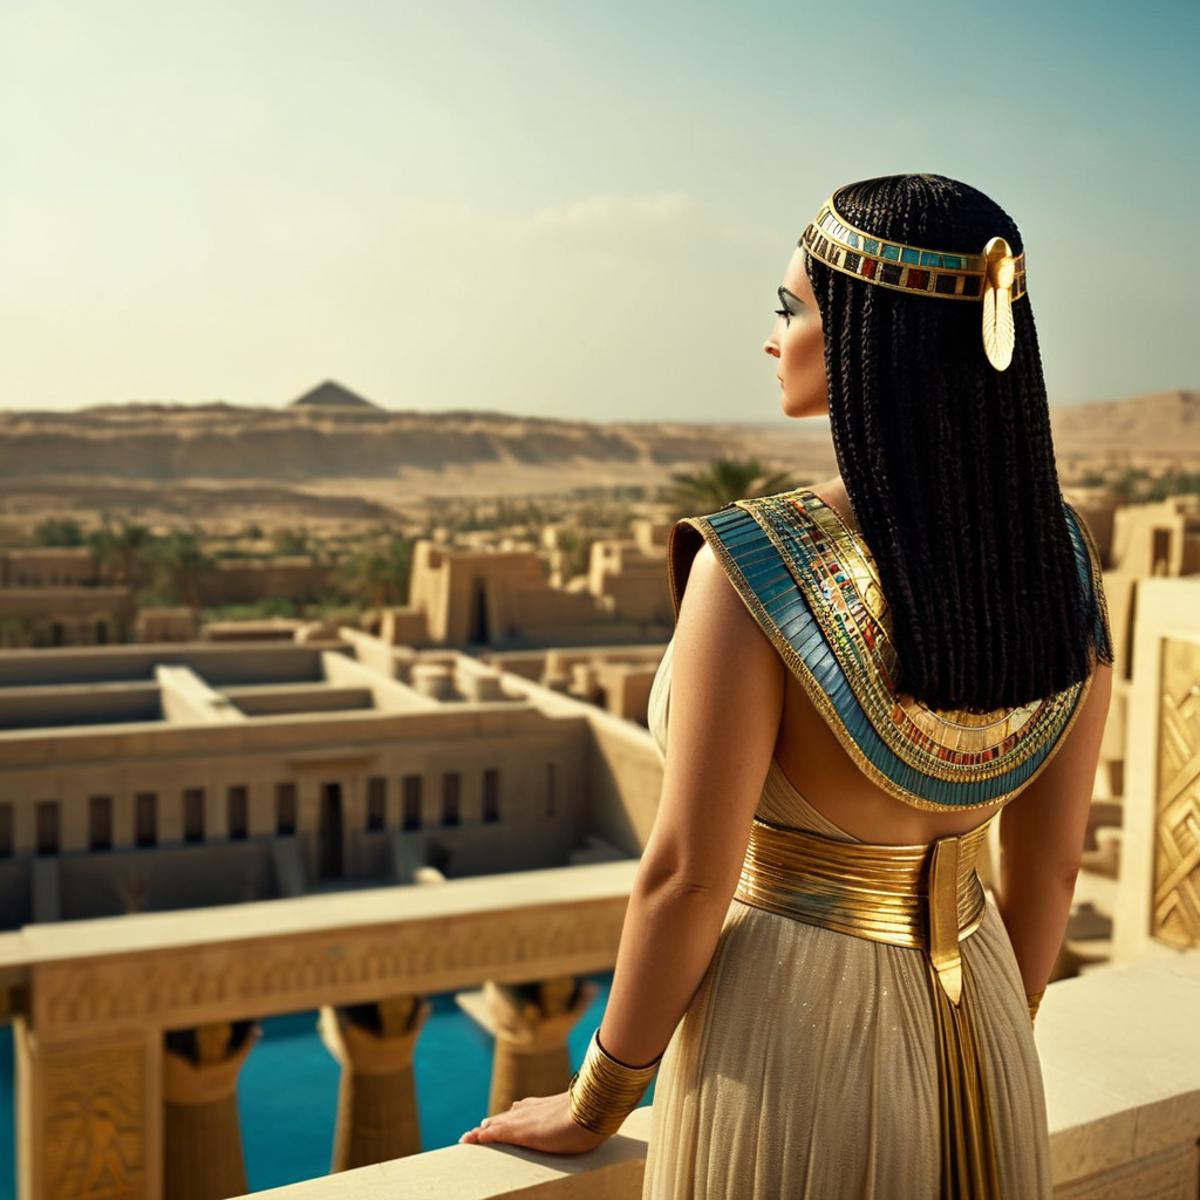 Cleopatra XL image by vantablackdark